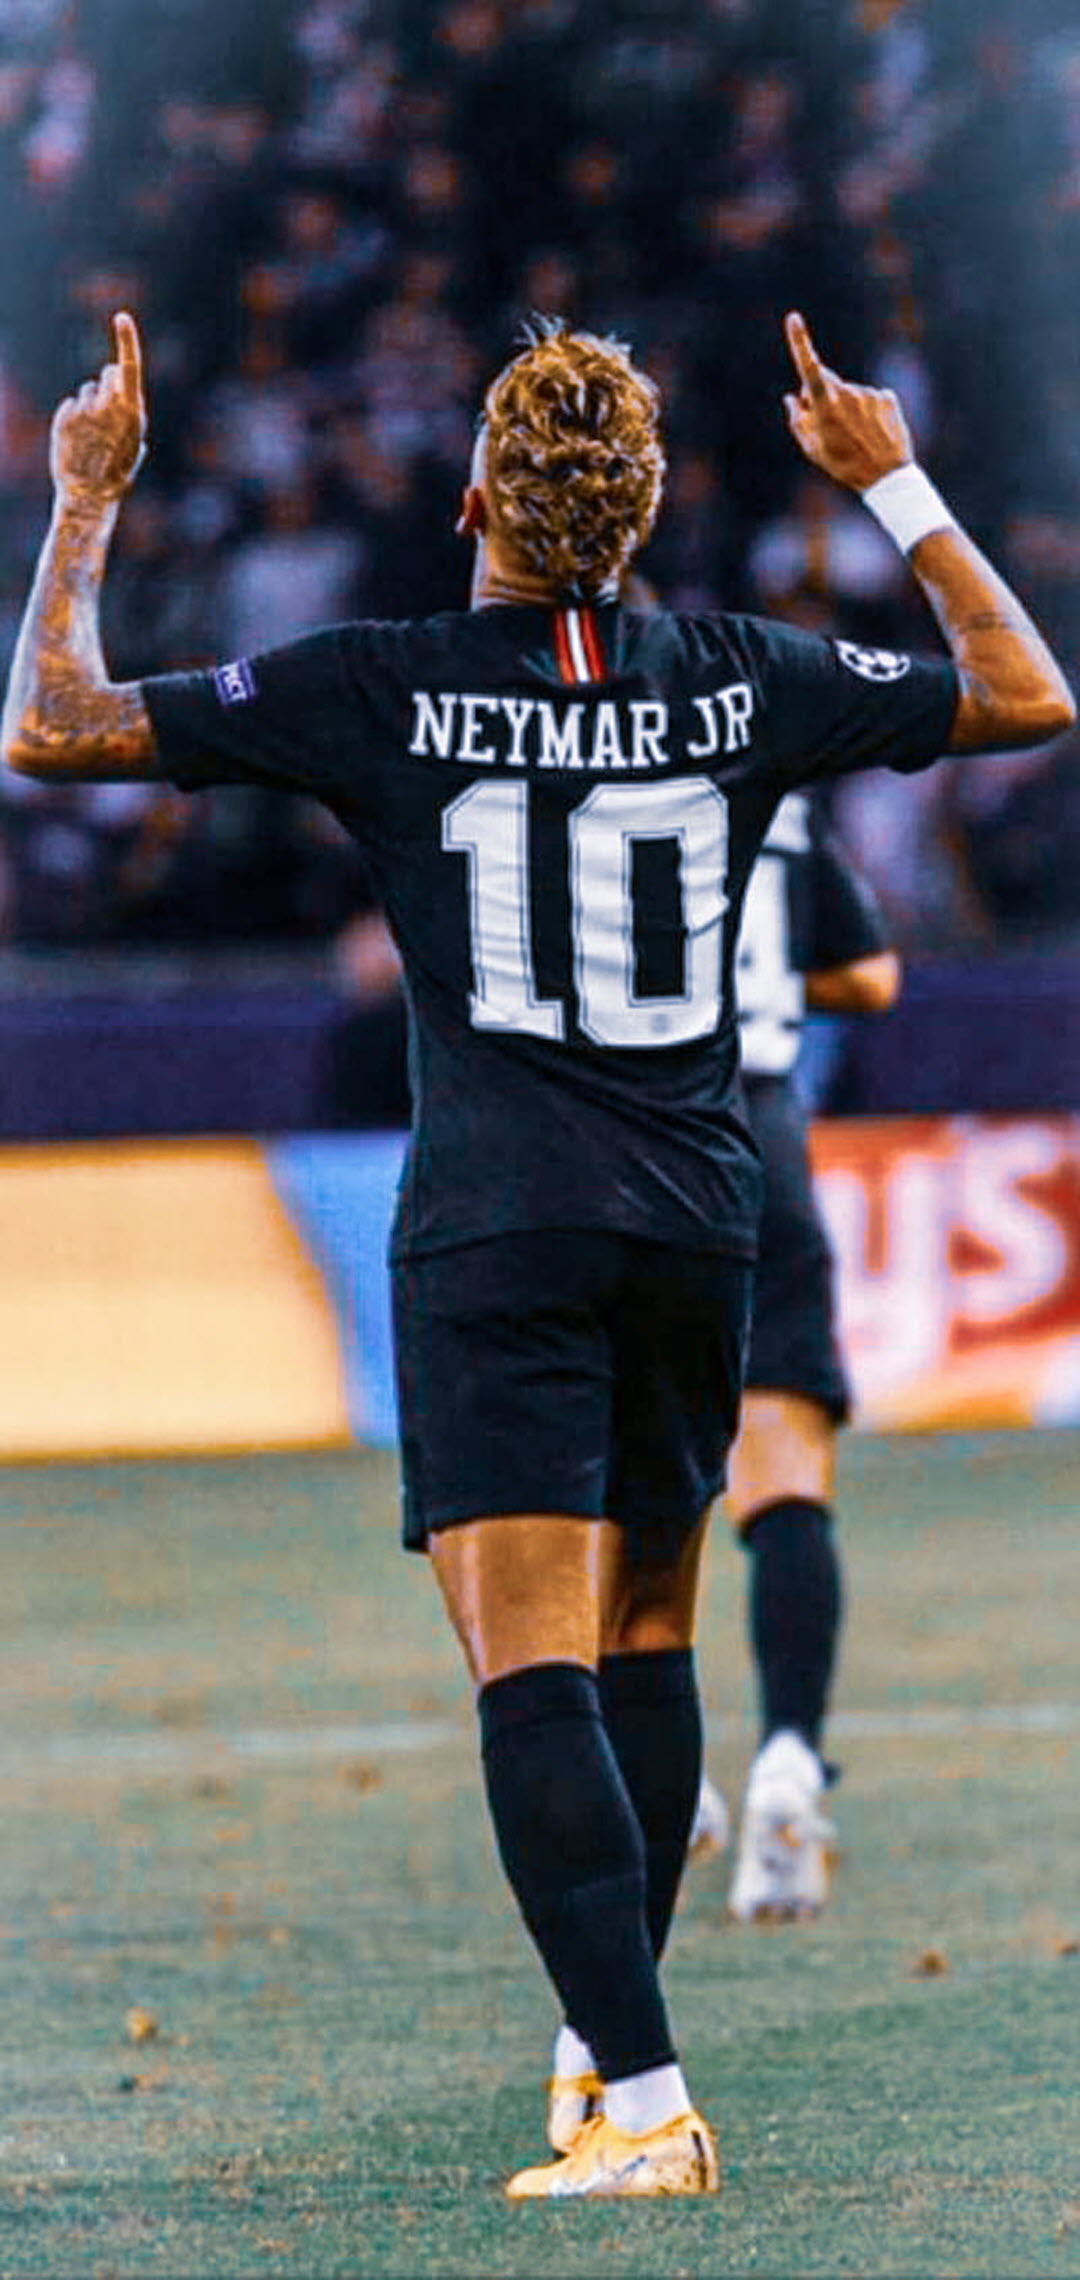 Tổng hợp 94 về neymar avatar  headenglisheduvn